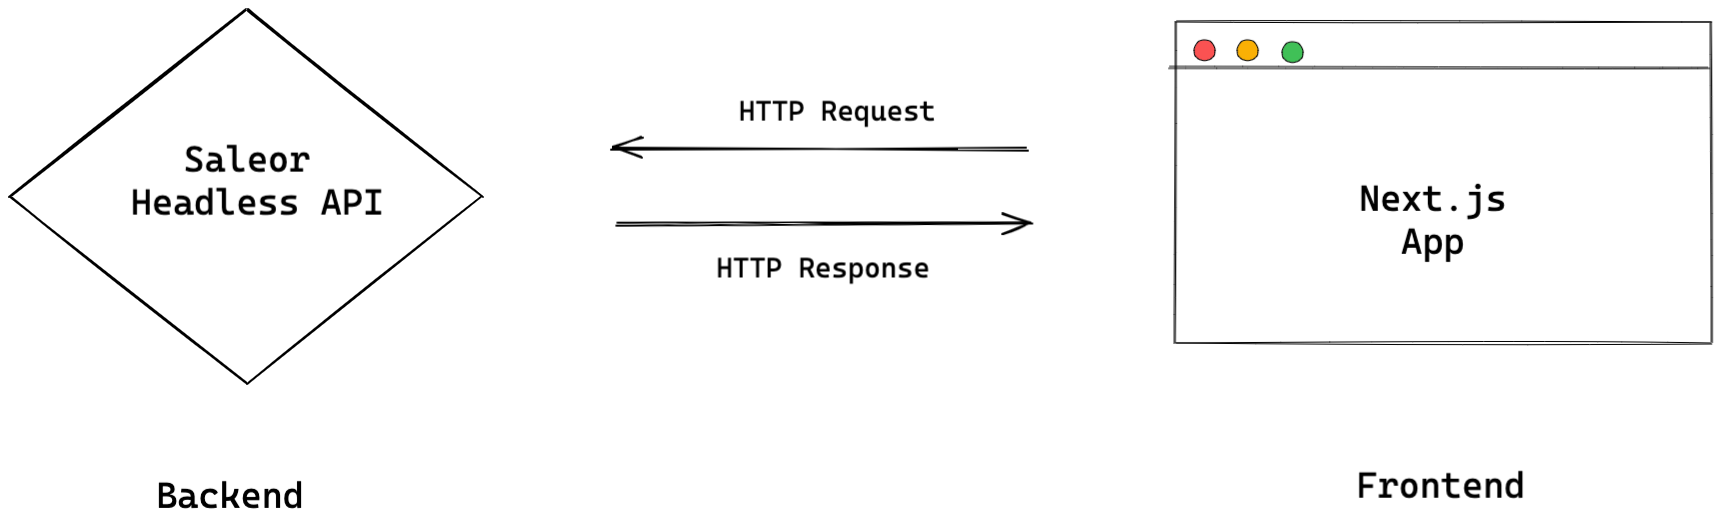 Overview of network requests between Saleor and Next.js app